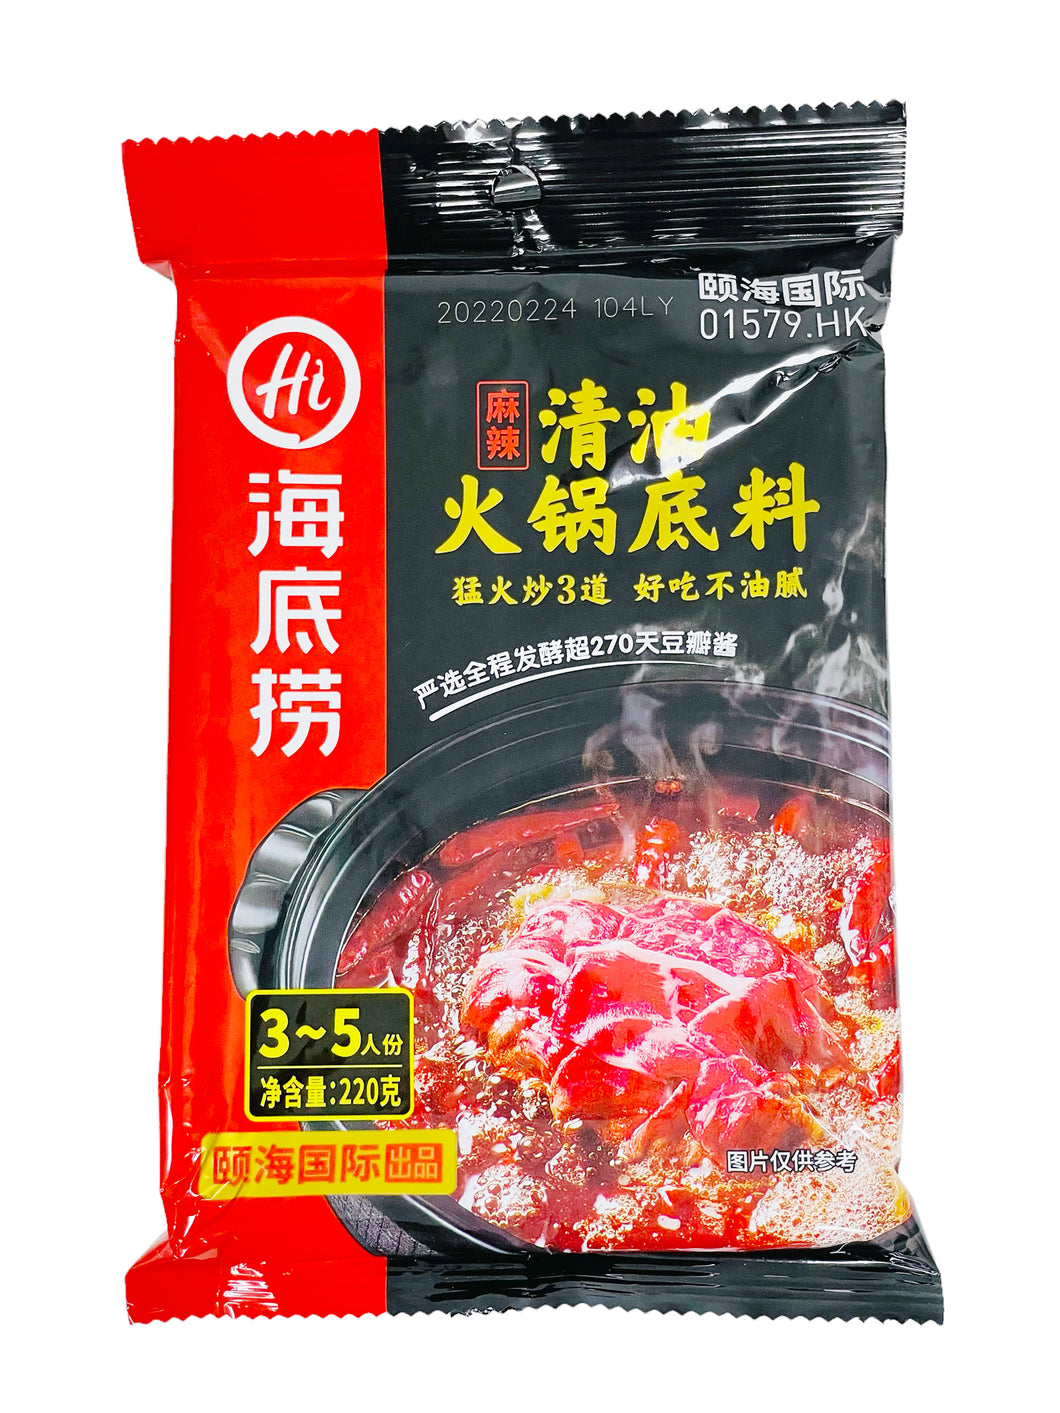 HDL Hotpot Condiment 220g 大海底捞（清油）火锅底料